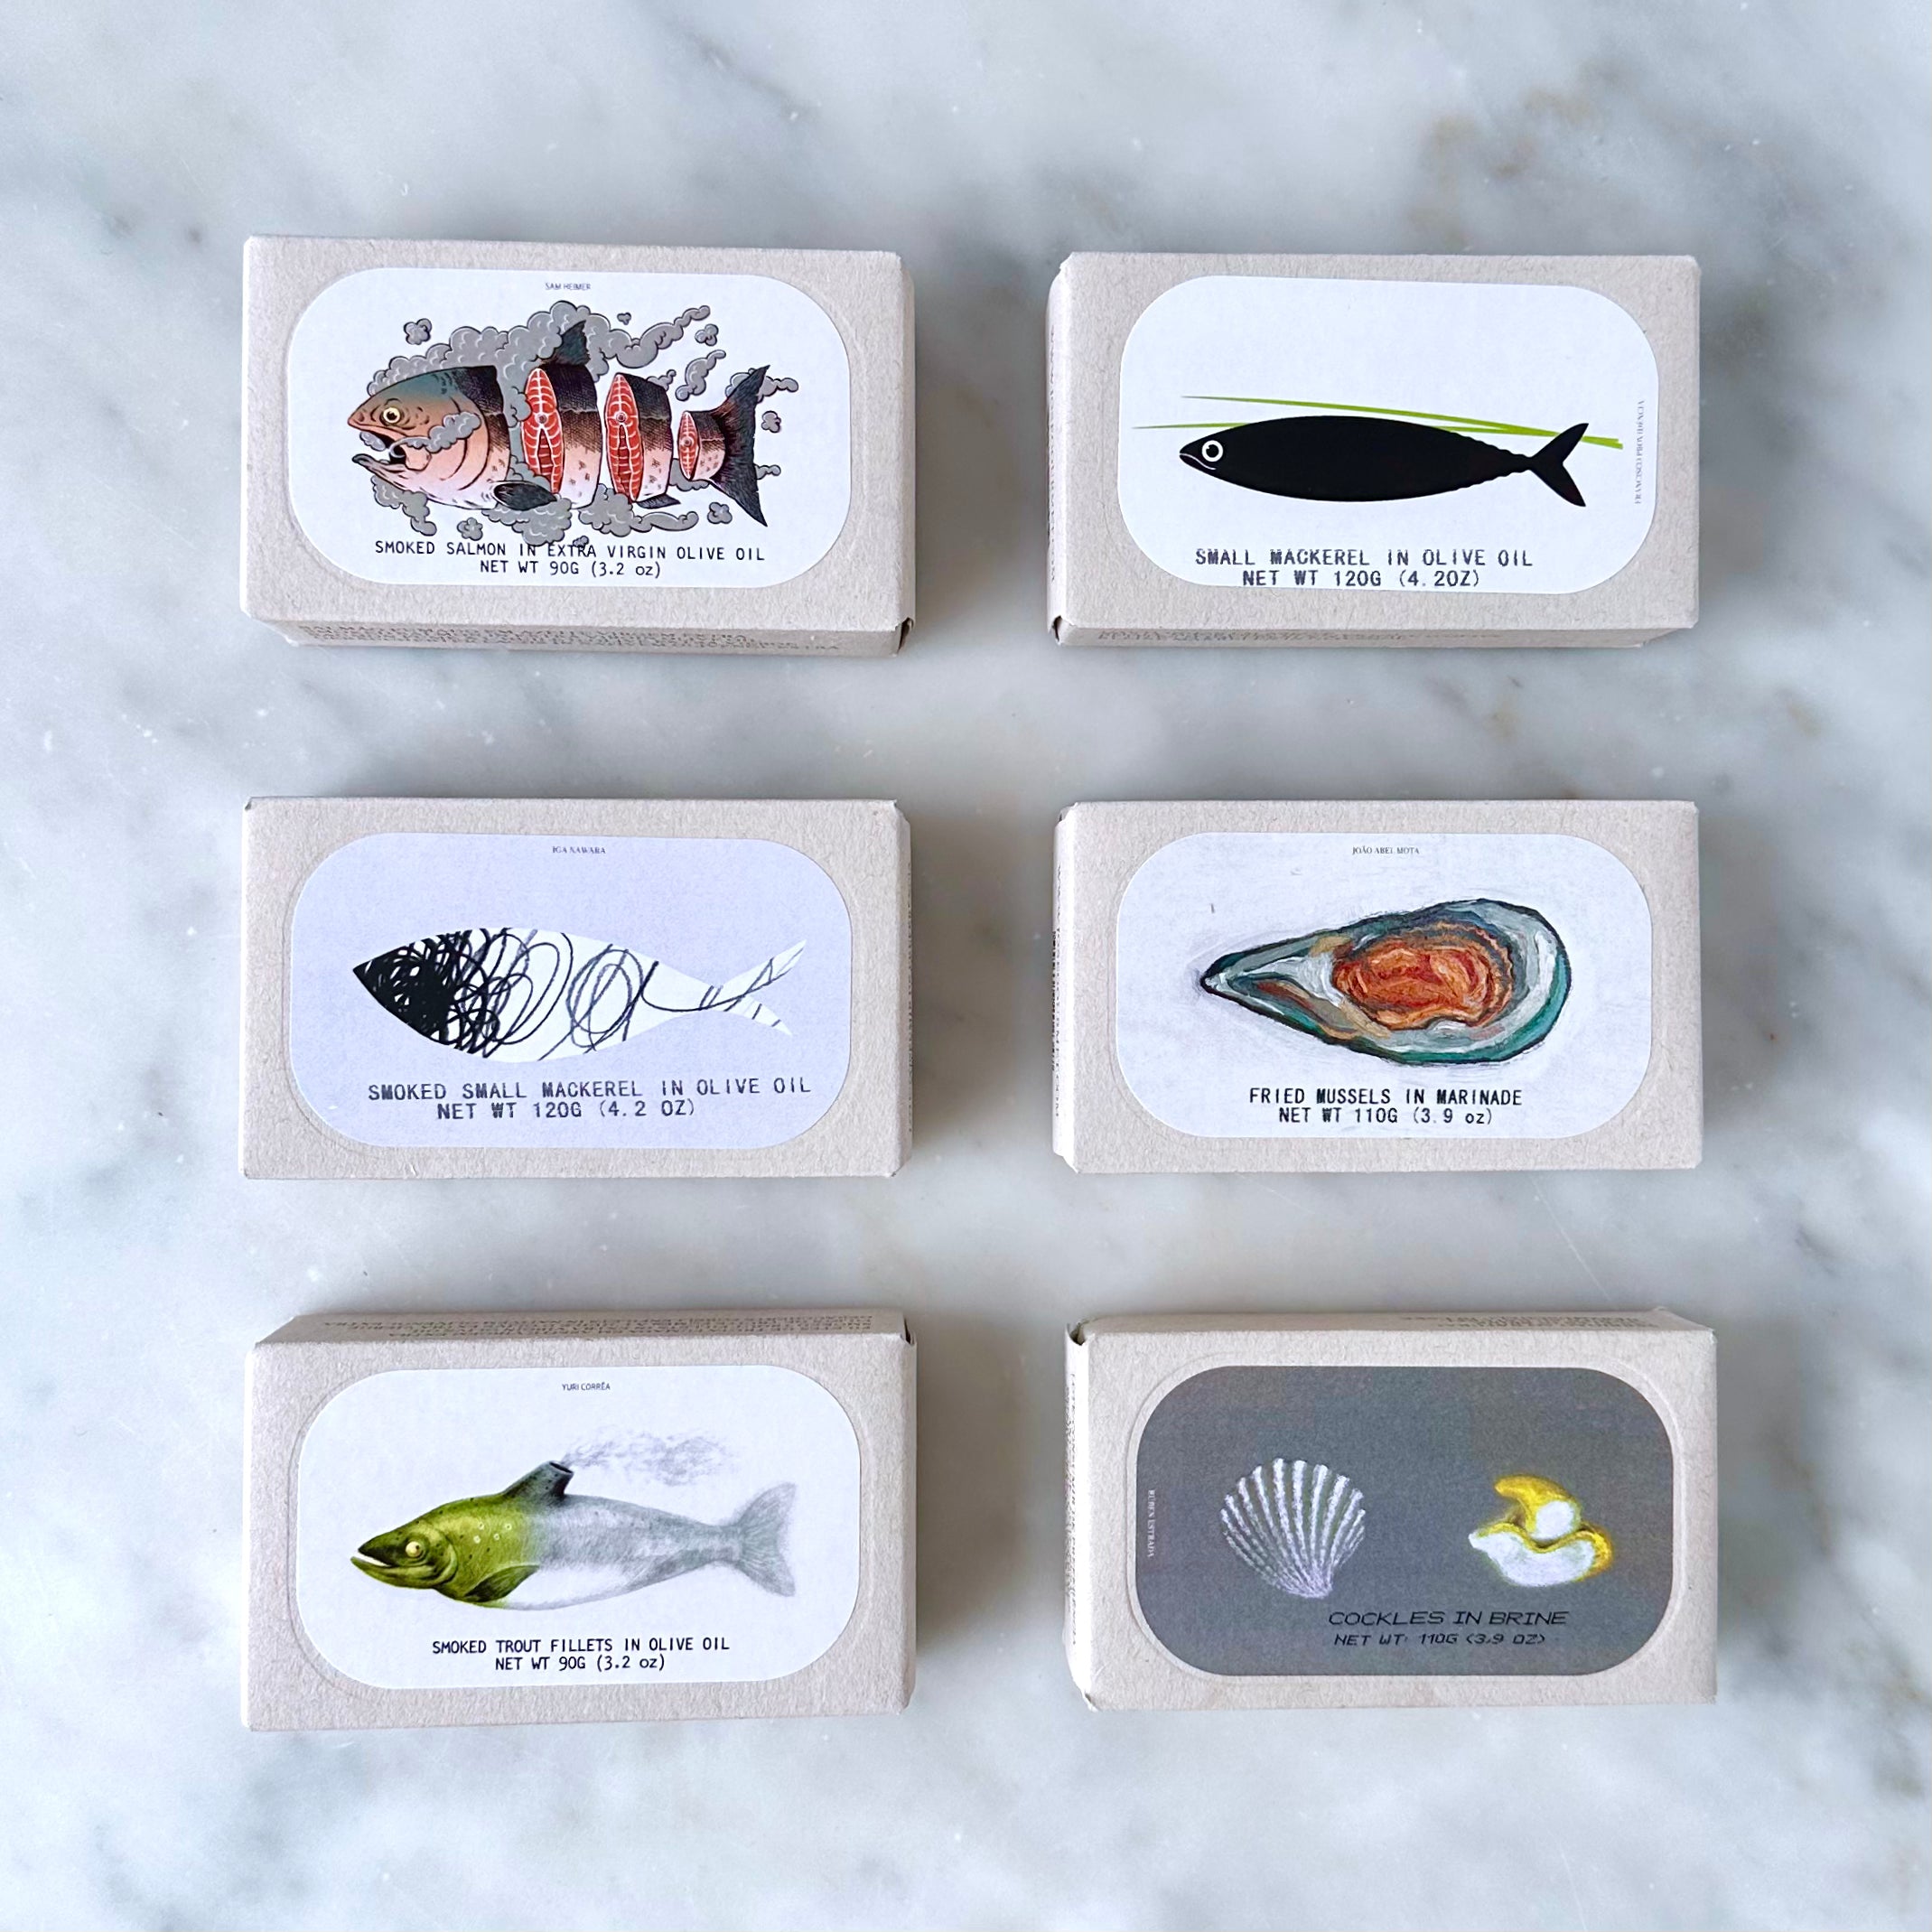 José Gourmet Tinned Fish collection